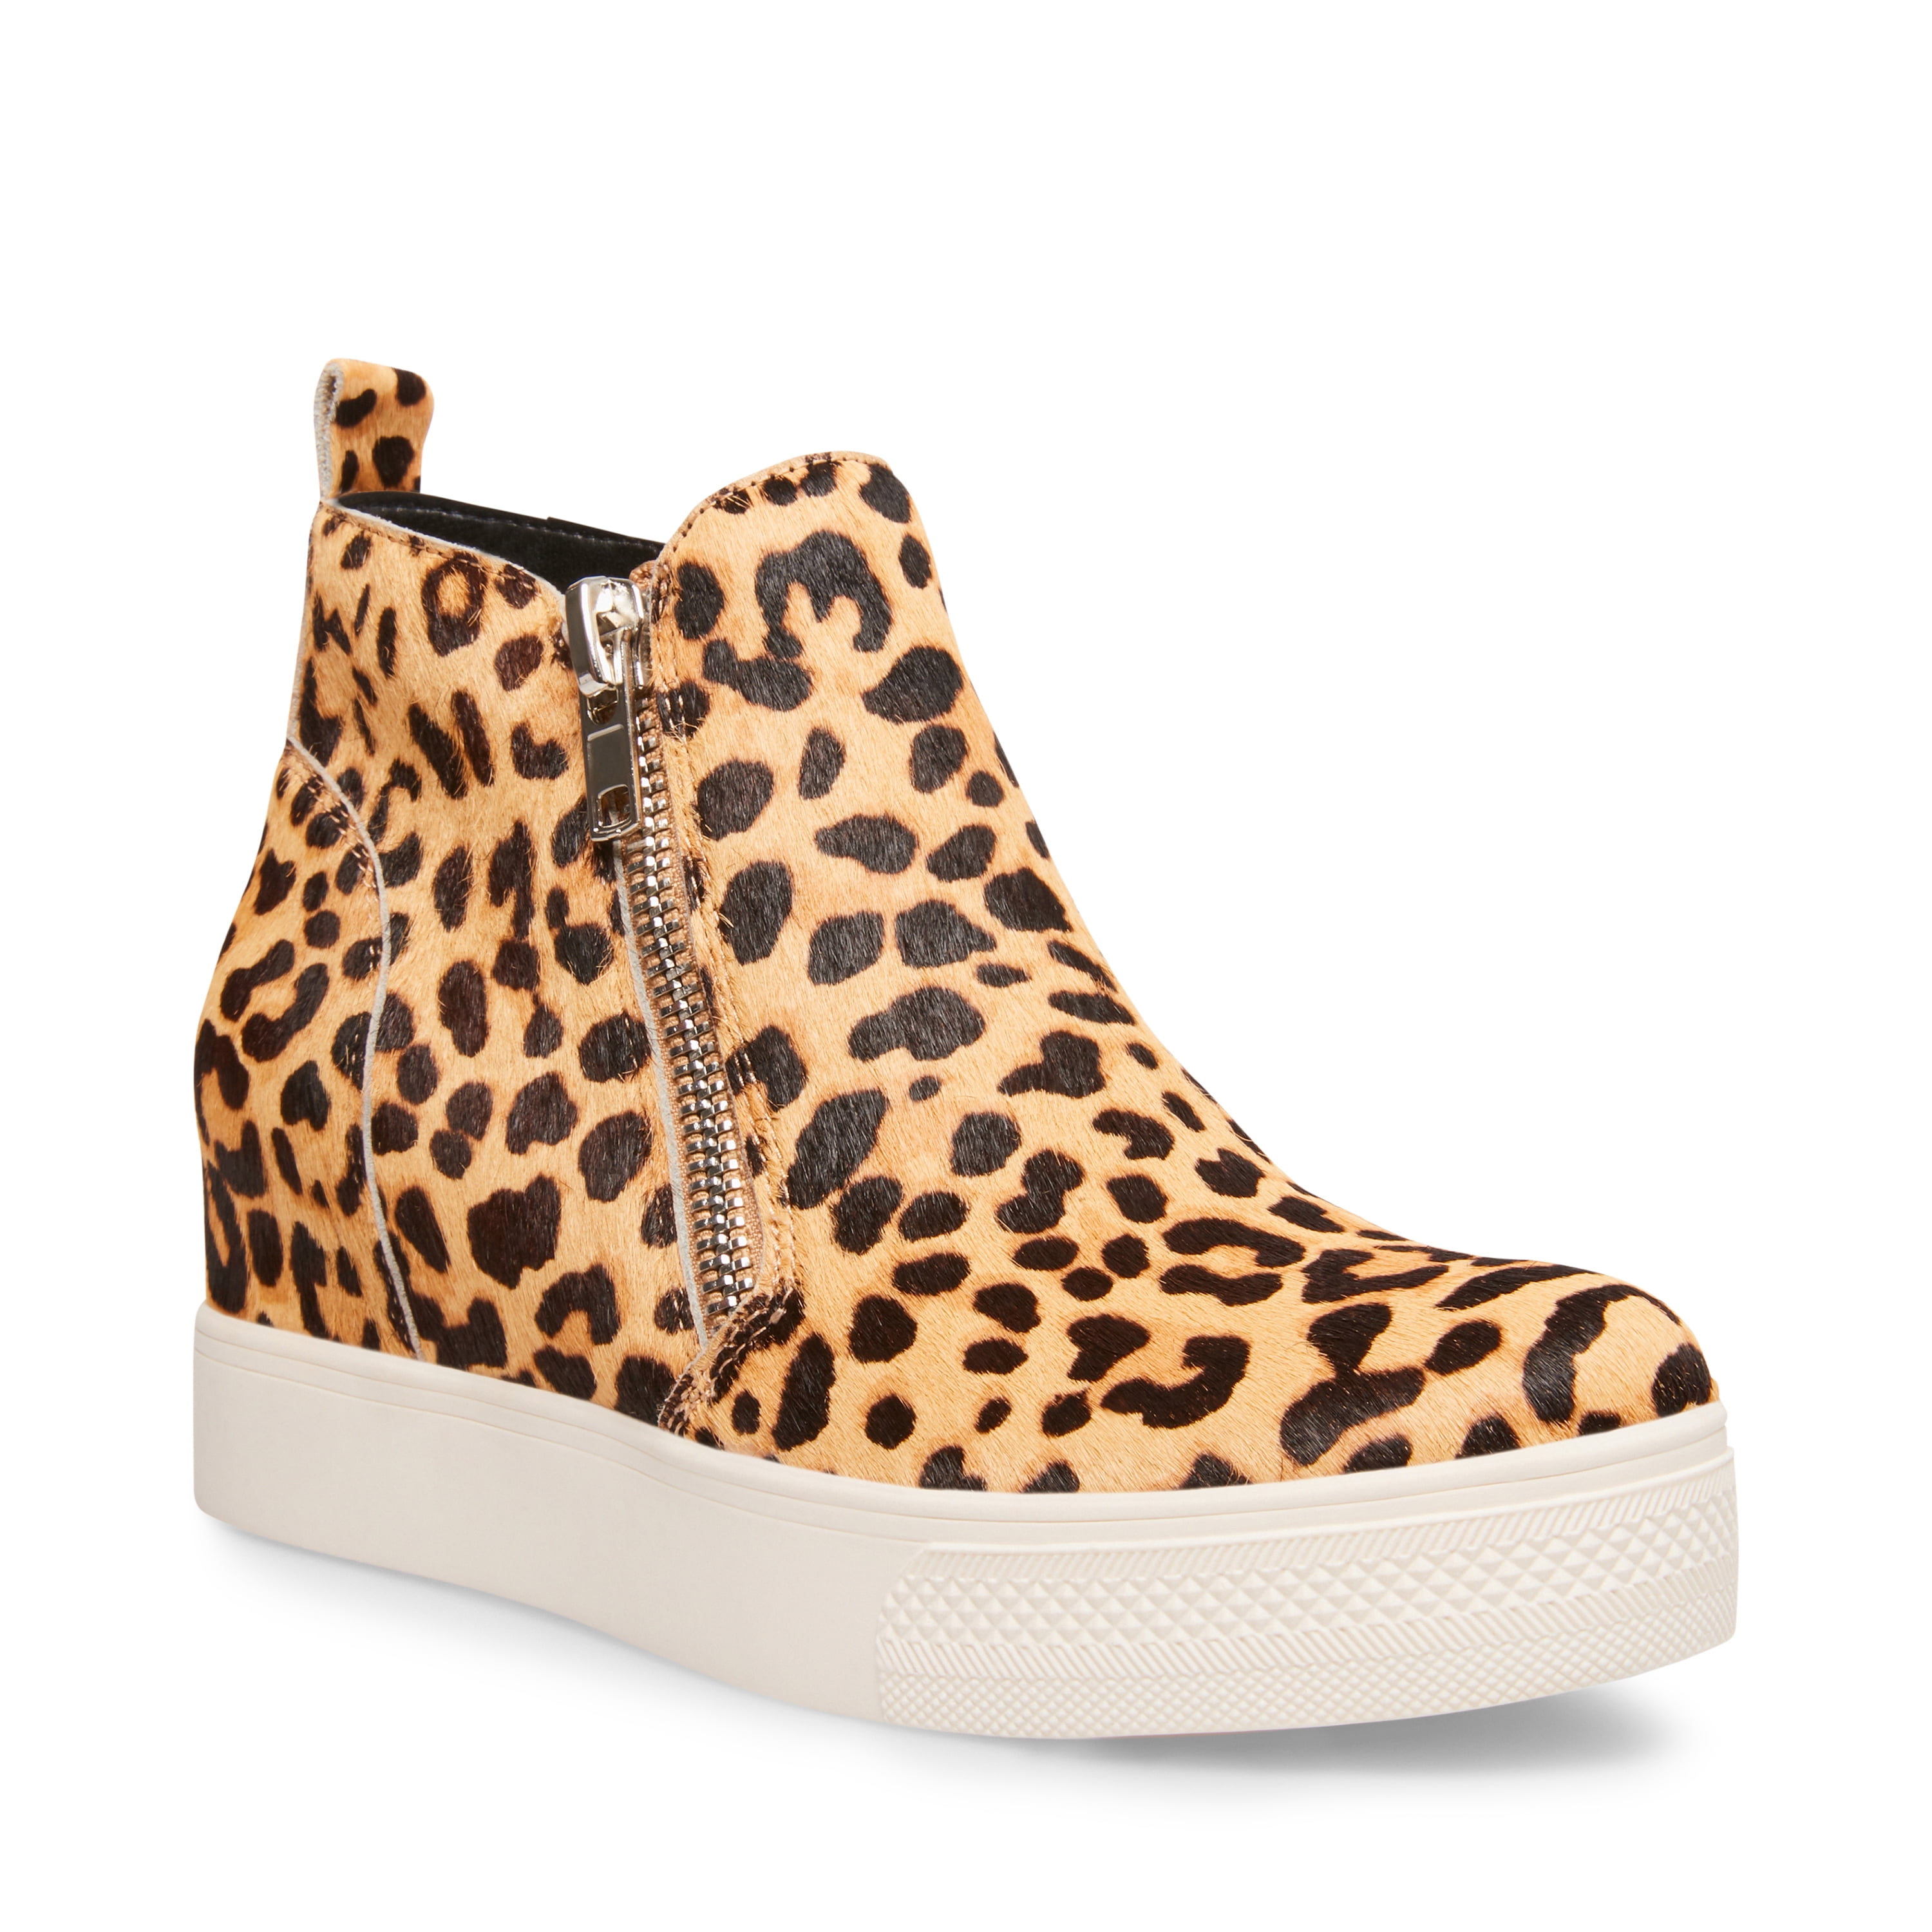 Steve Madden Wedgie Leopard Sneaker (Women's) - Walmart.com